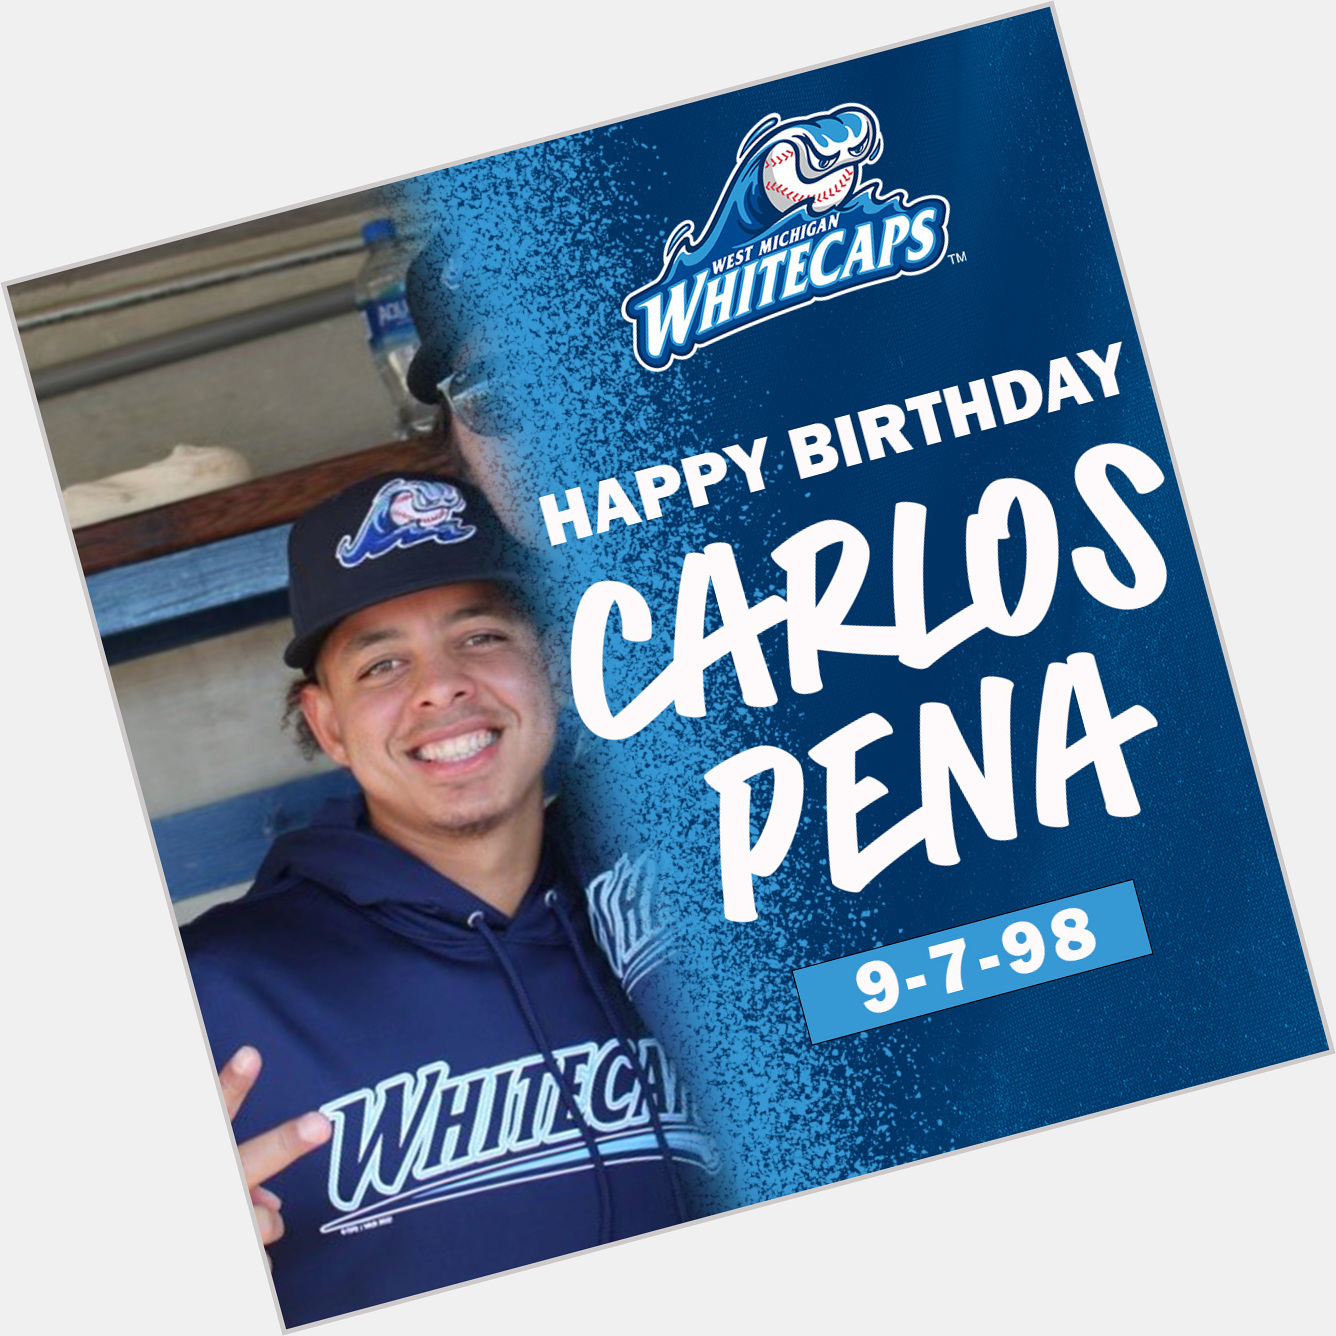 Hooray and Happy Birthday to Whitecaps pitcher Carlos Péña!  